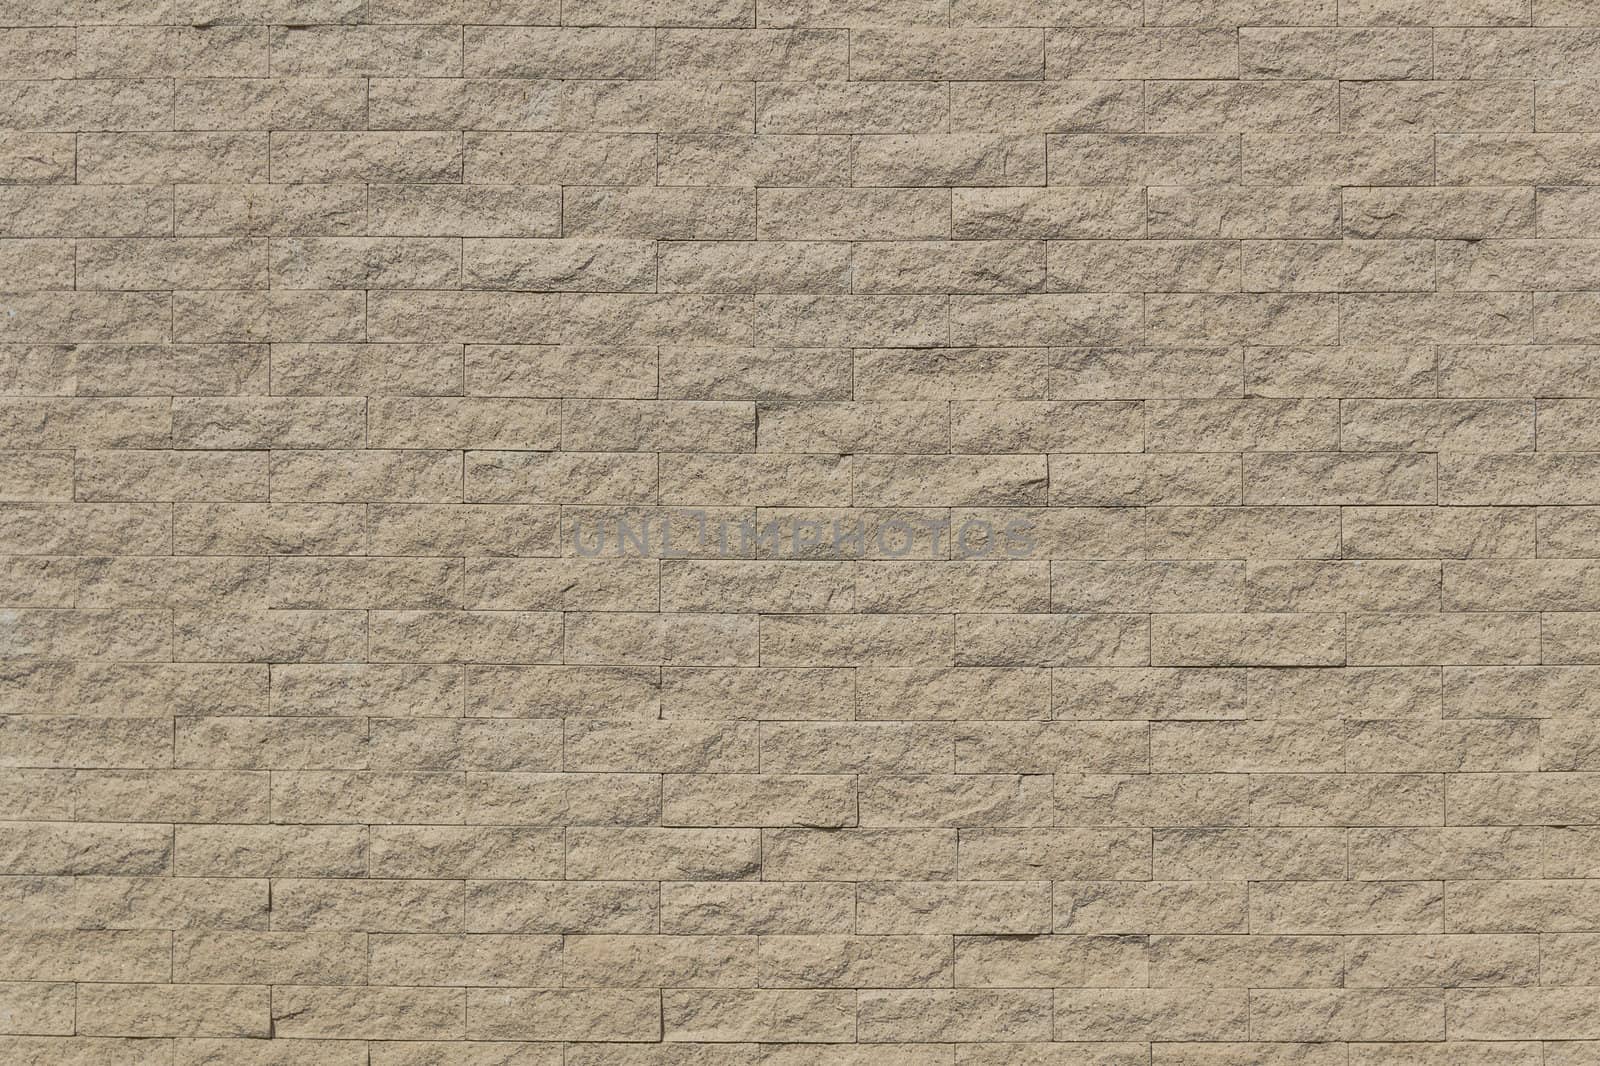 Sand stone  bricks pattern by punpleng